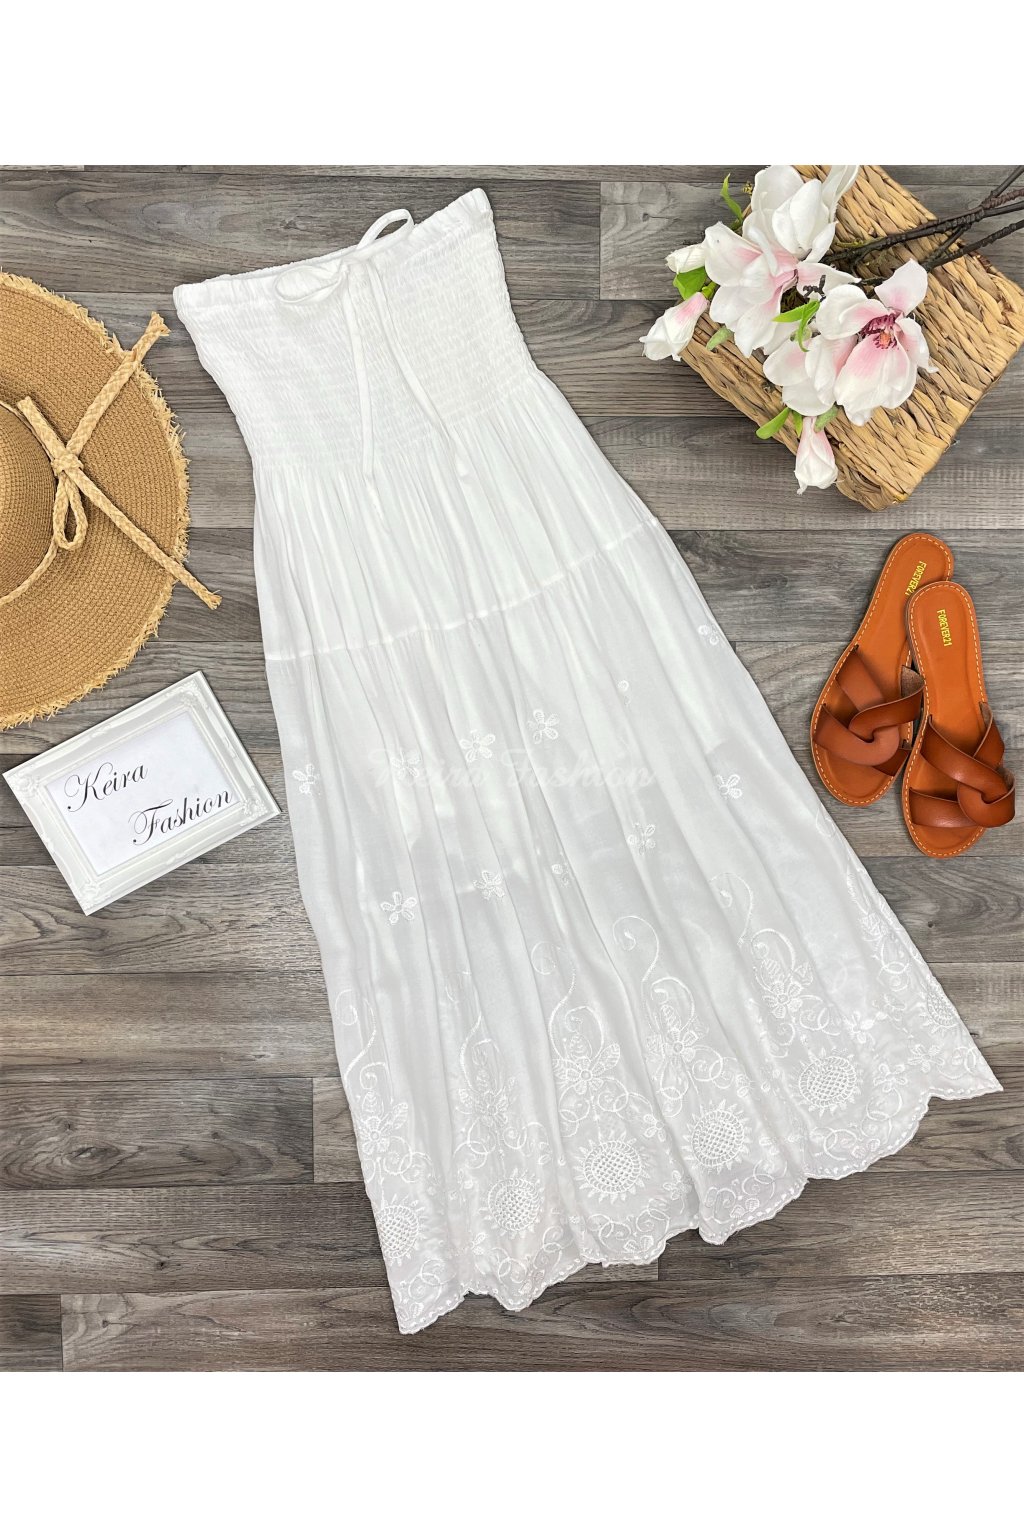 biele vyšívané šaty